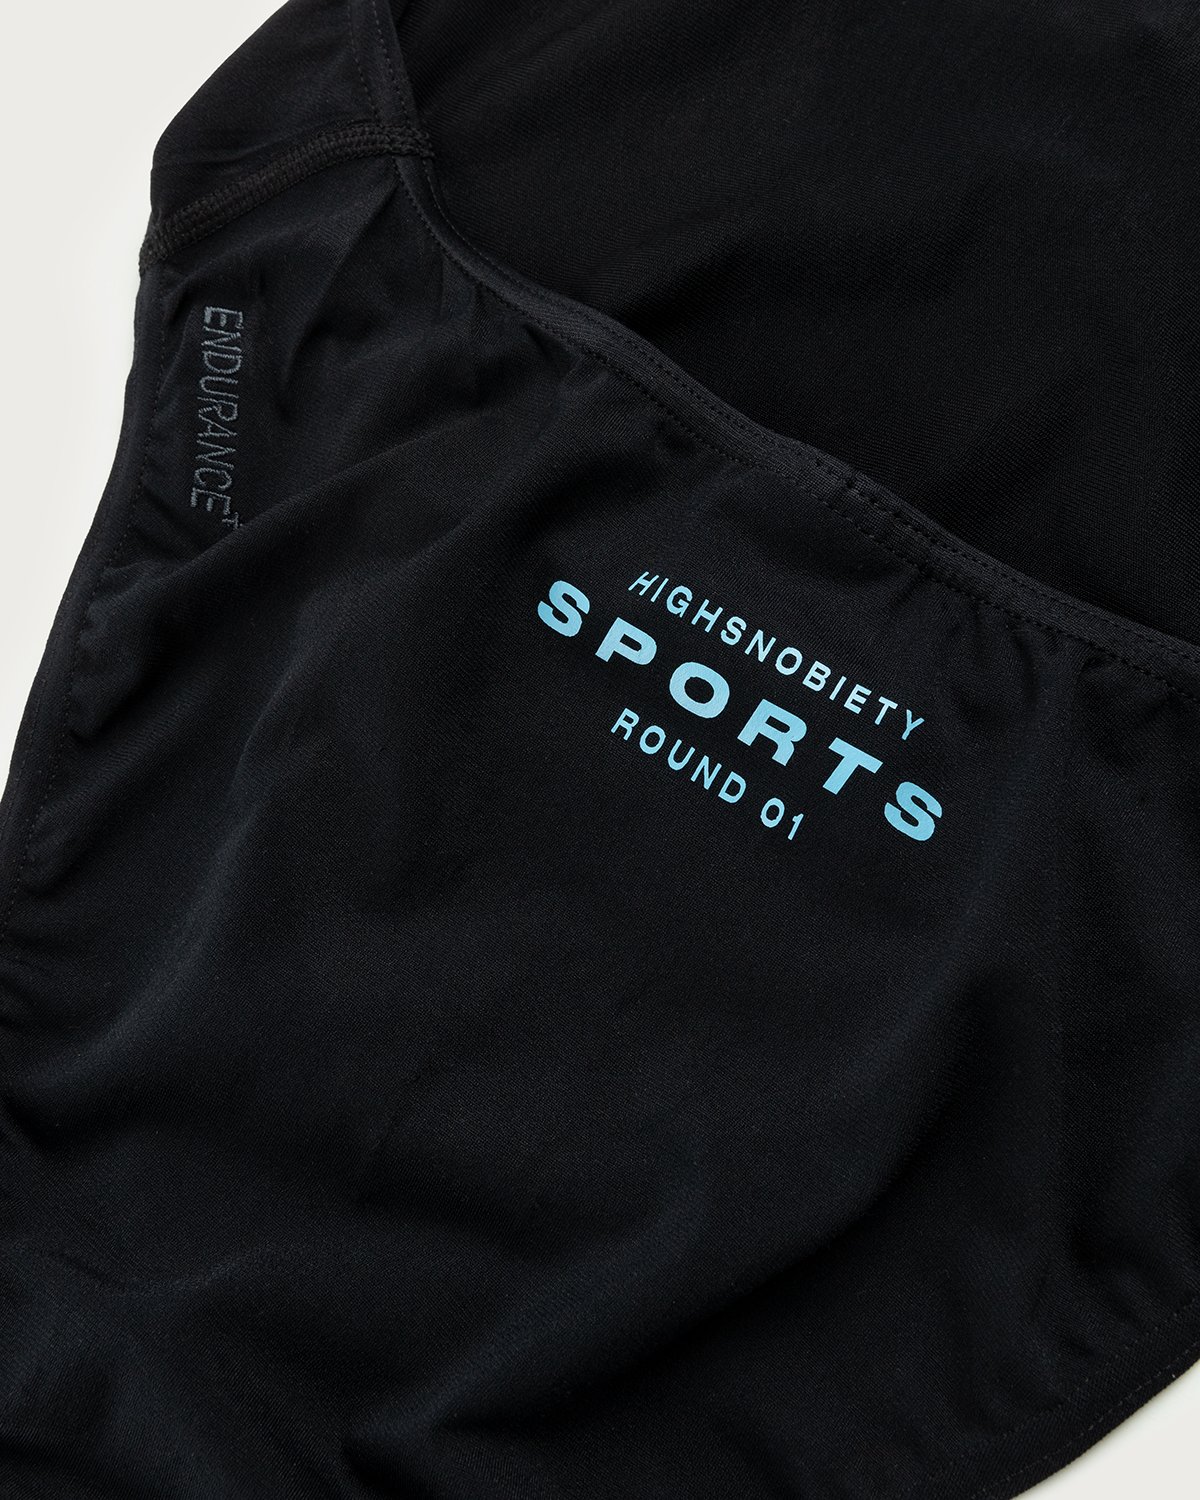 Speedo x Highsnobiety - HS Sports Focus One-Piece Swimsuit Black - Swimsuits - Black - Image 5